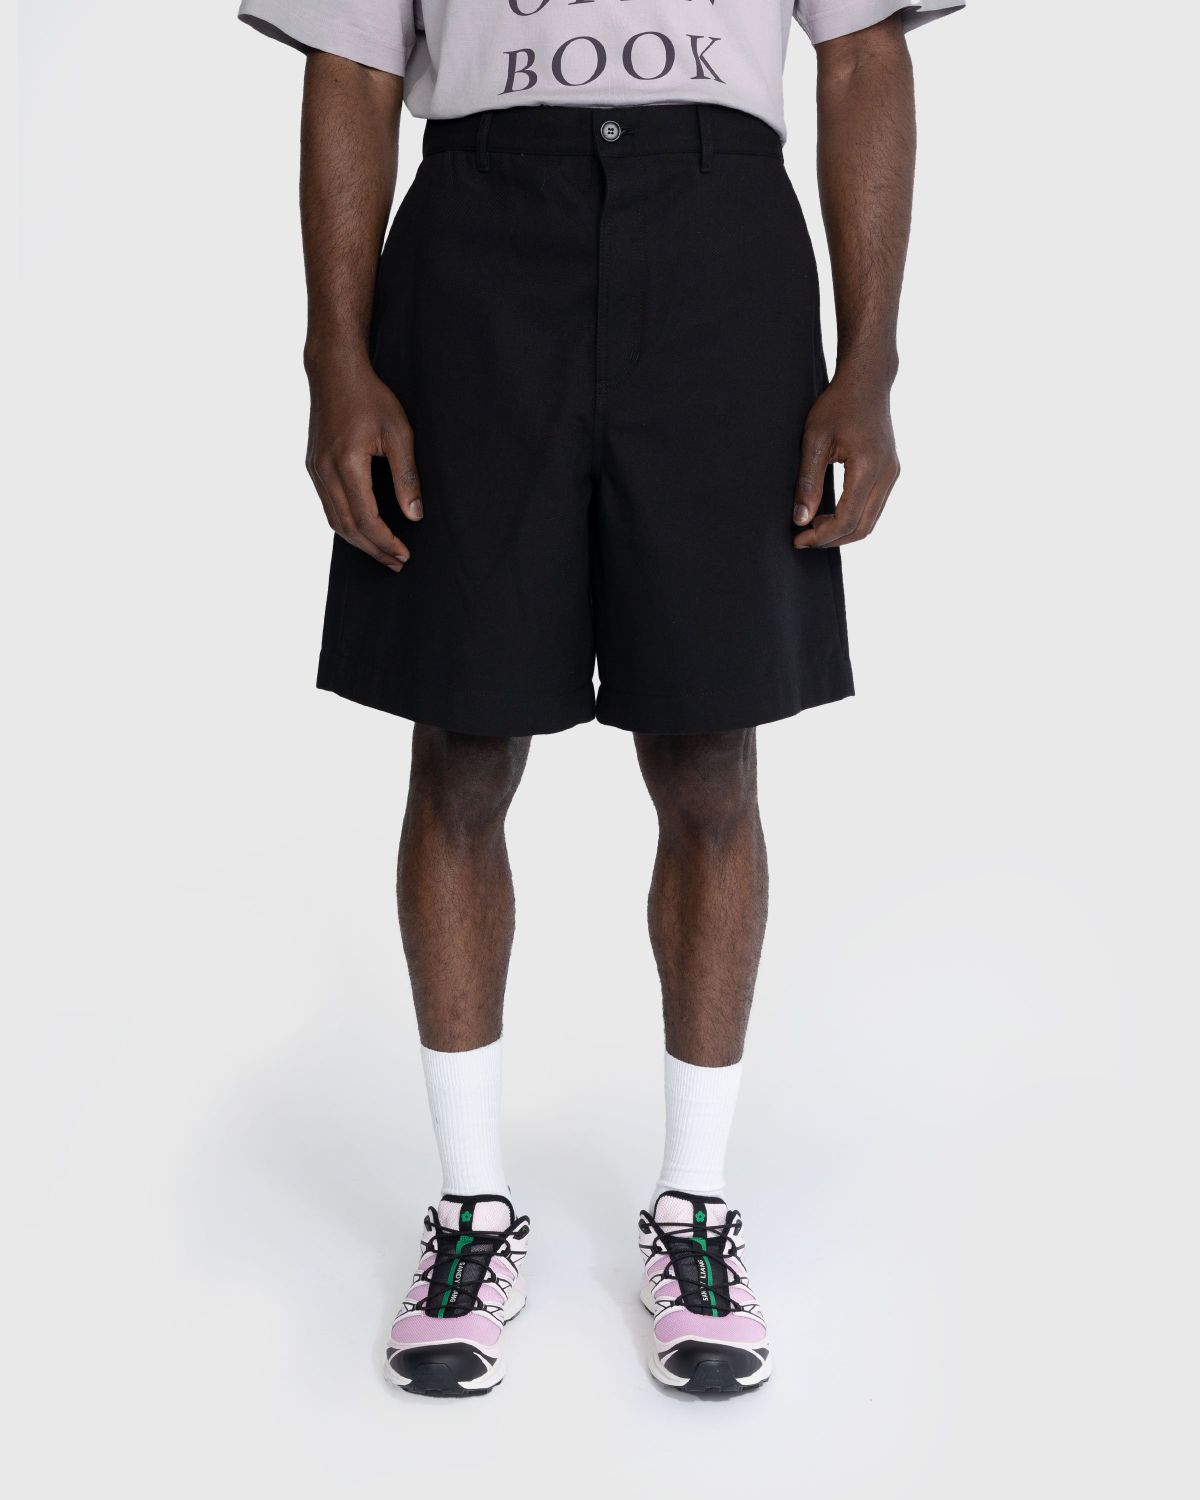 Acne Studios – Regular Fit Shorts Black - Shorts - Black - Image 2